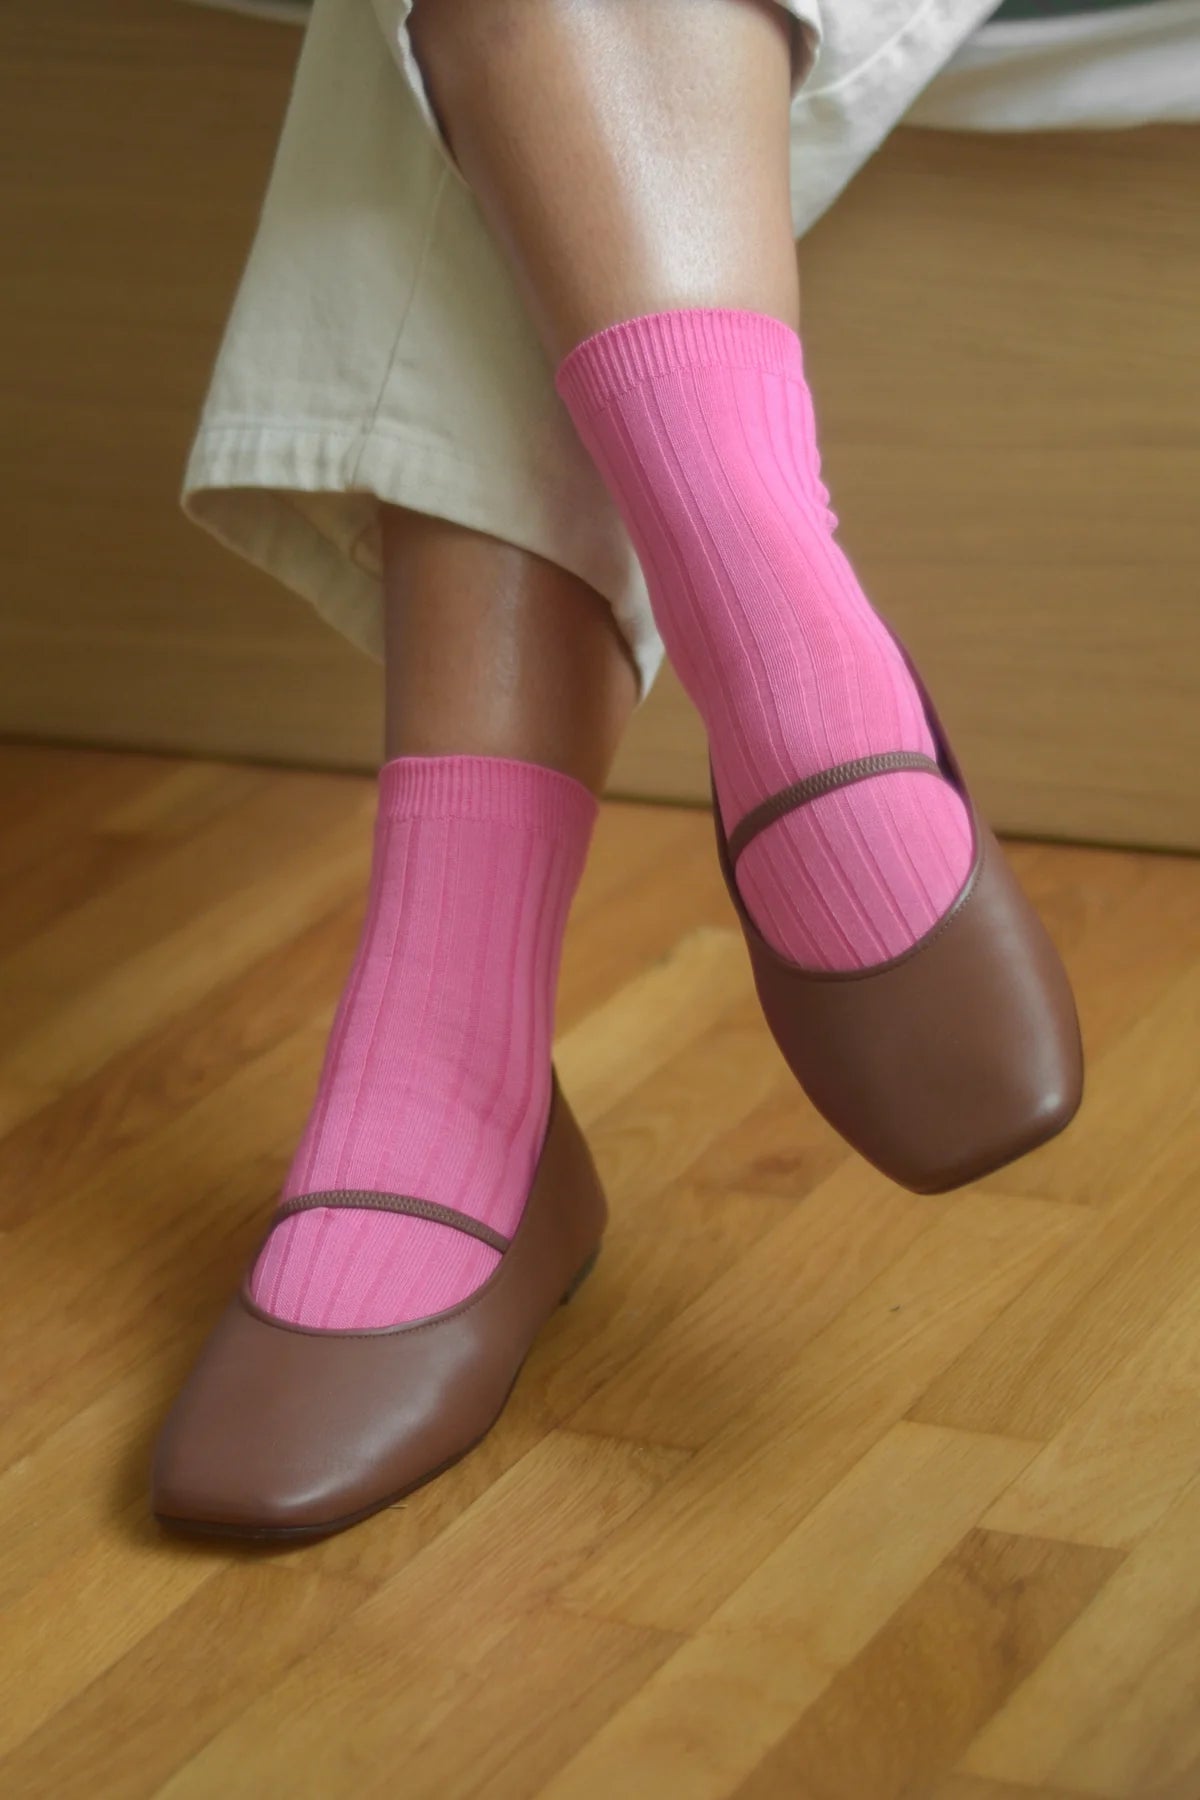 Her Socks in Bright Pink